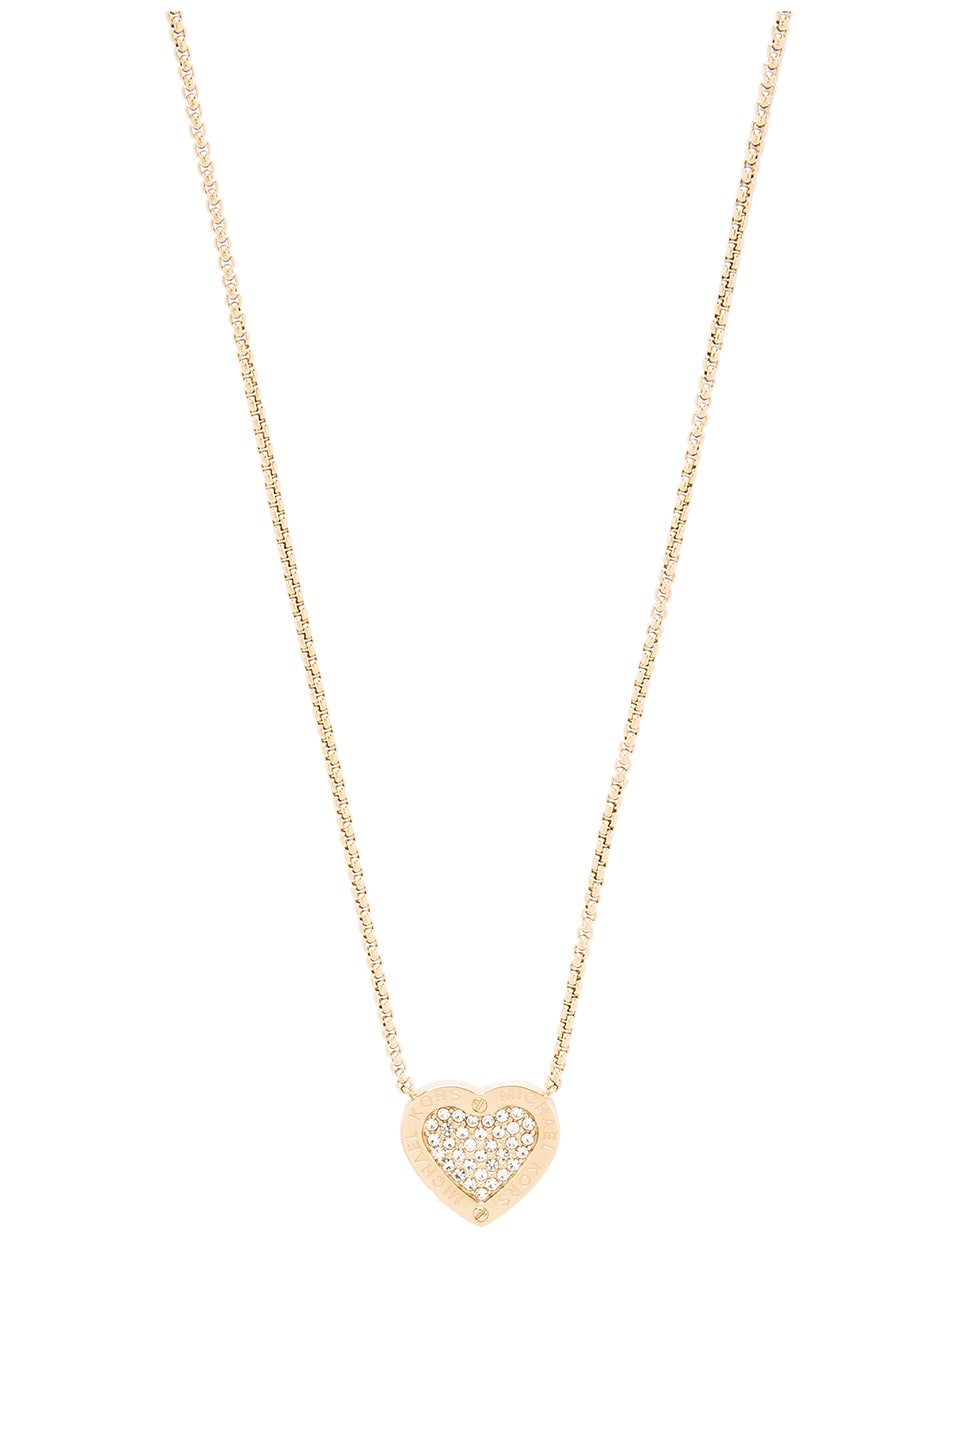 Michael Kors Heart Pendant Necklace in 